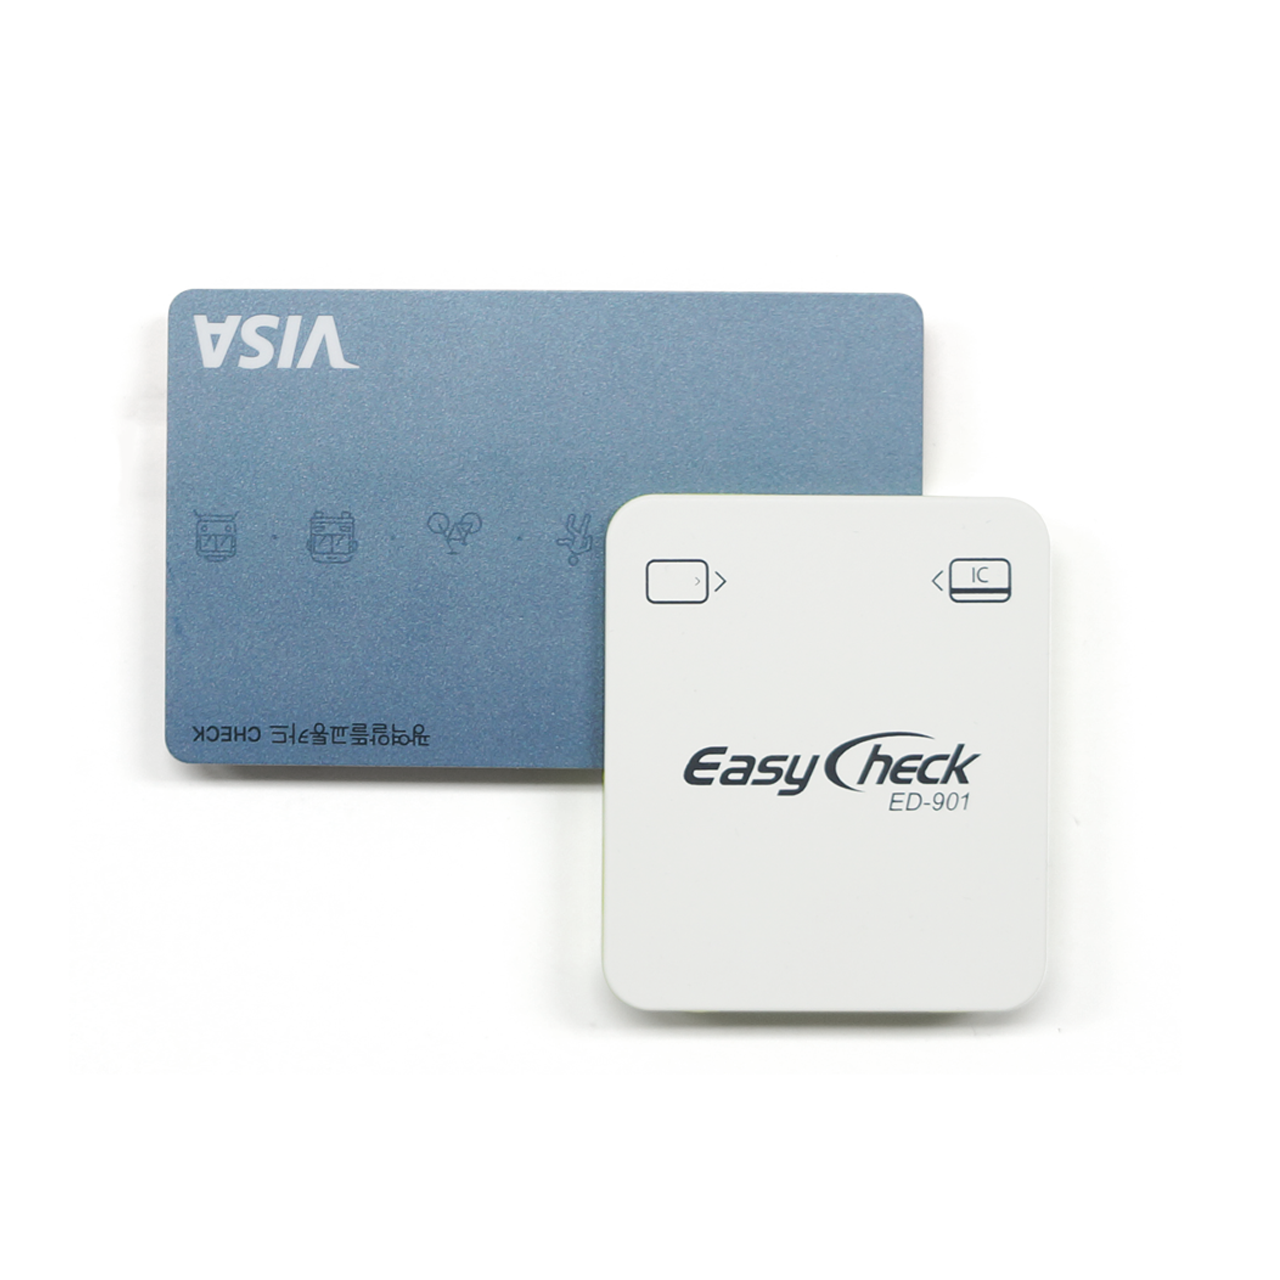 ED-901 이지체크 스마트폰 블루투스 휴대용 무선 카드단말기 배달 푸드트럭 플리마켓 카드체크기 KICC 정품